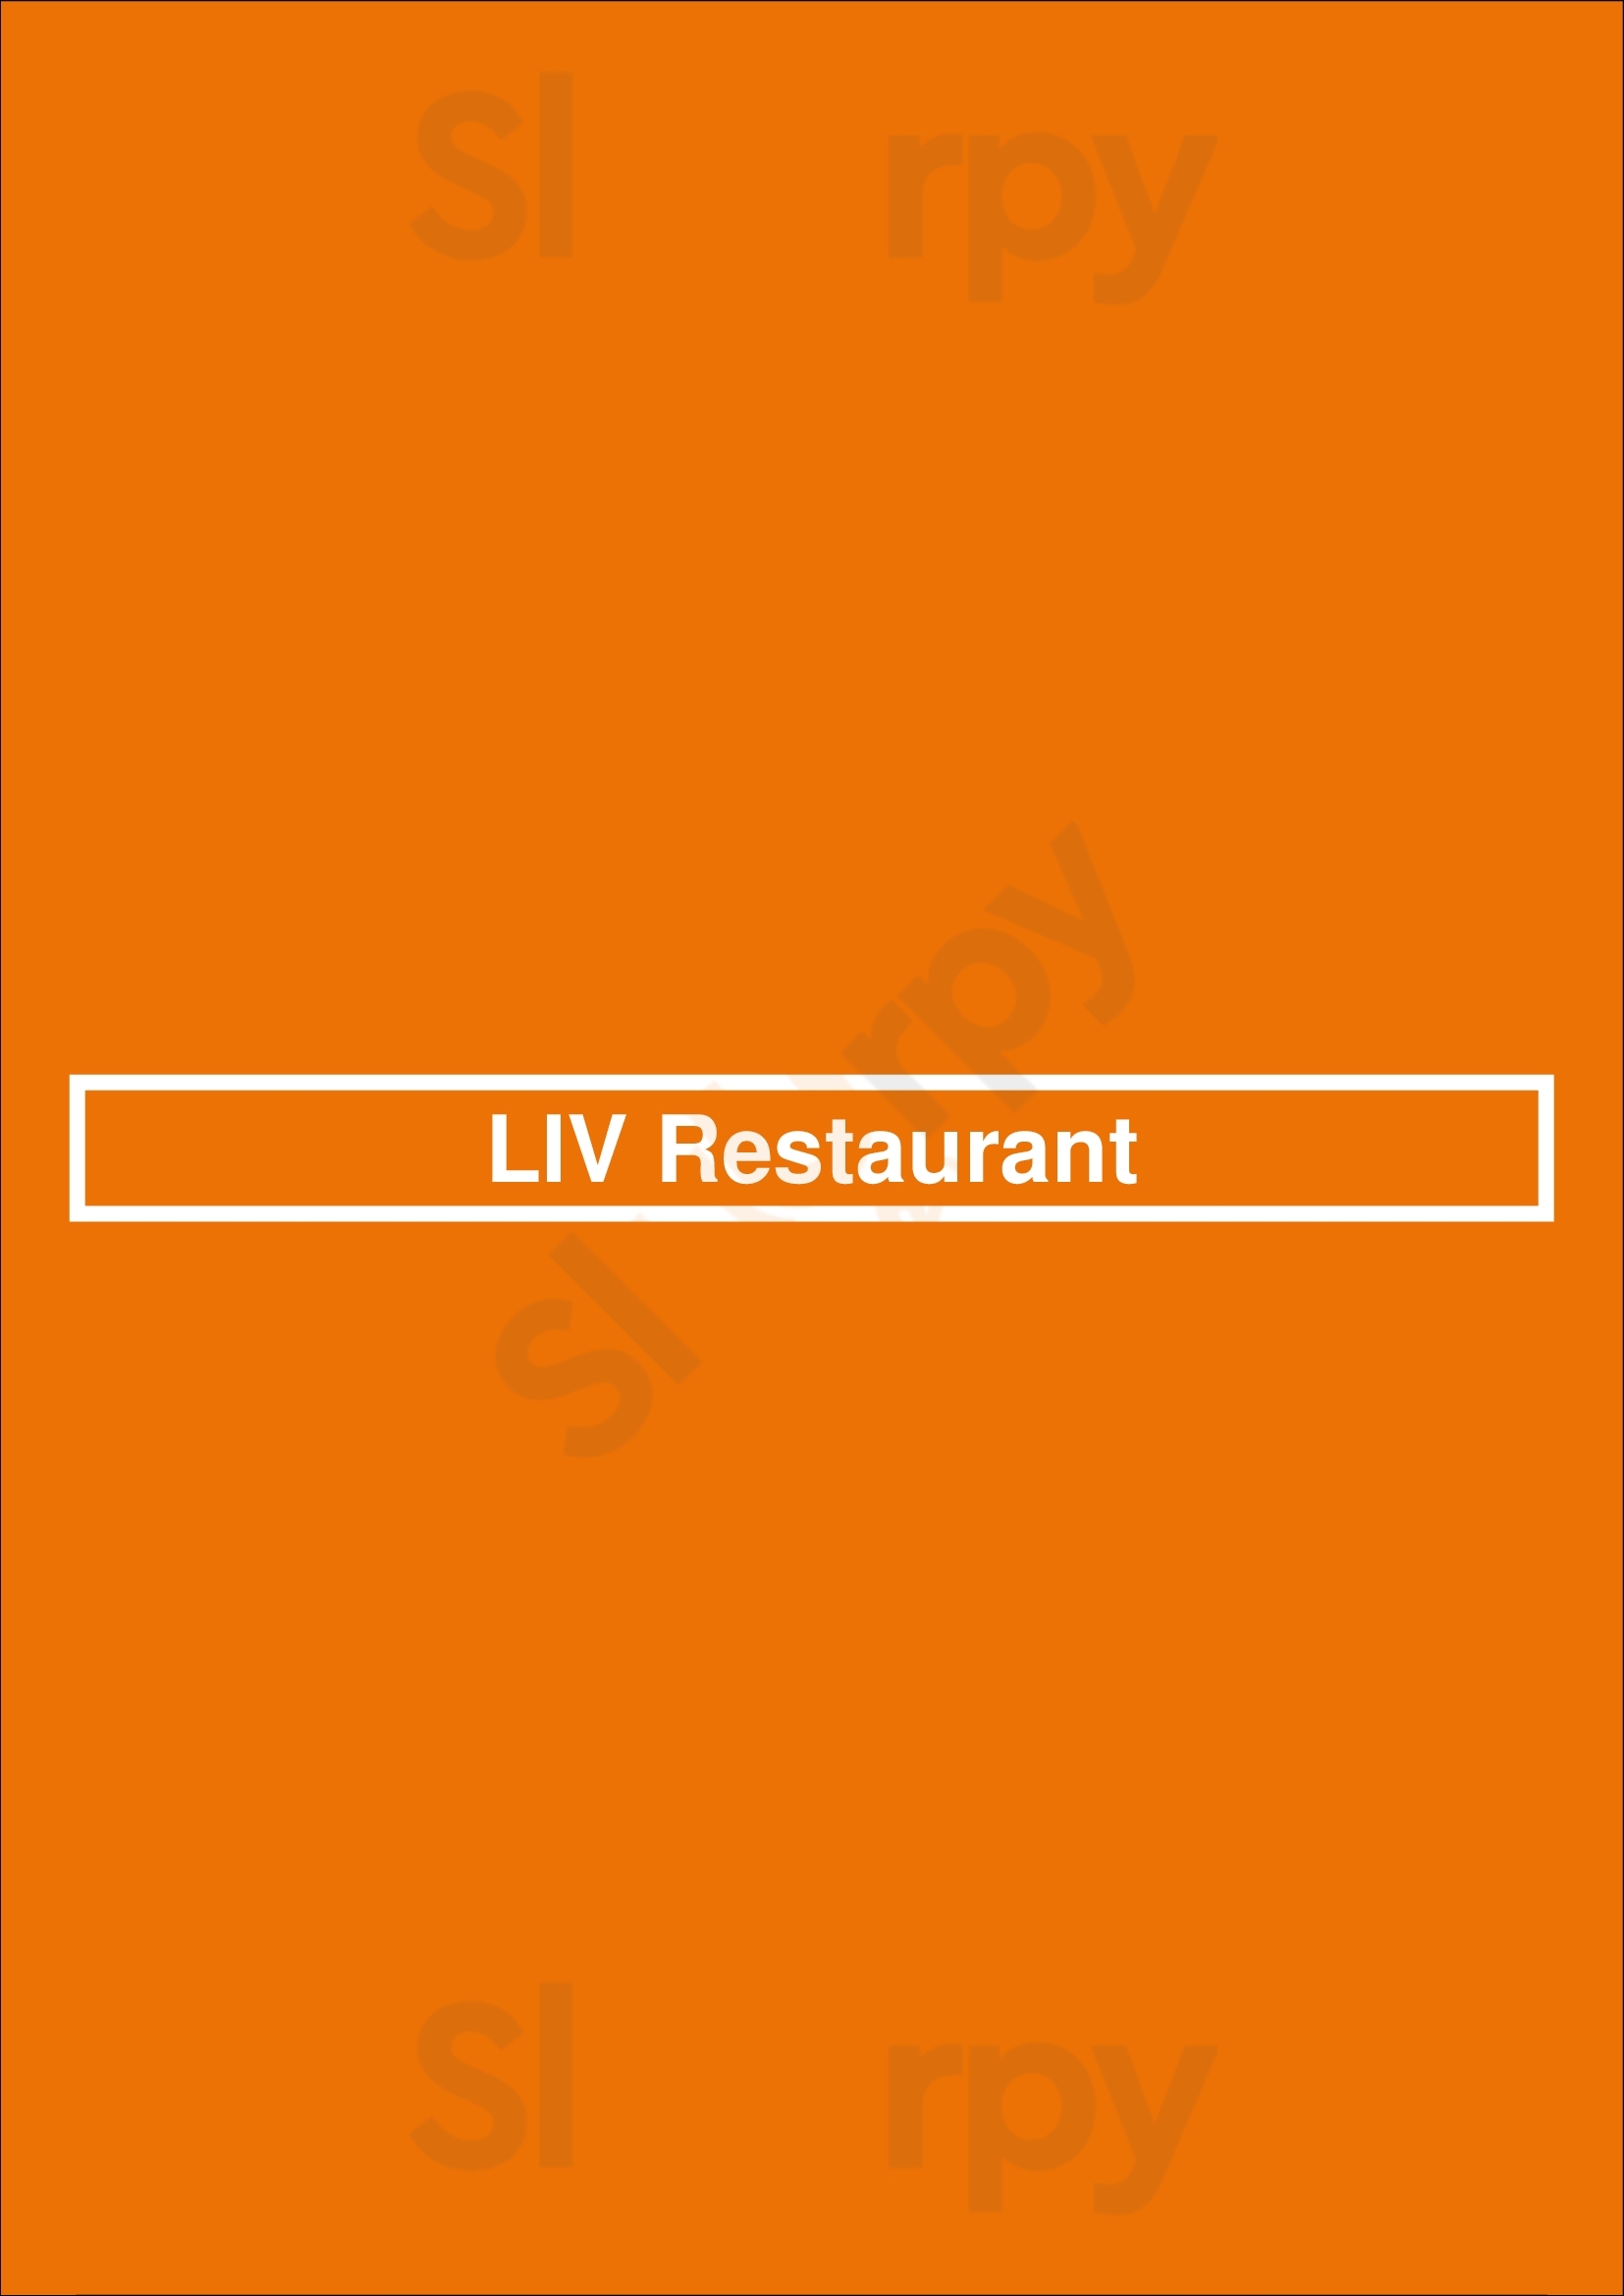 Liv Restaurant Niagara-on-the-Lake Menu - 1